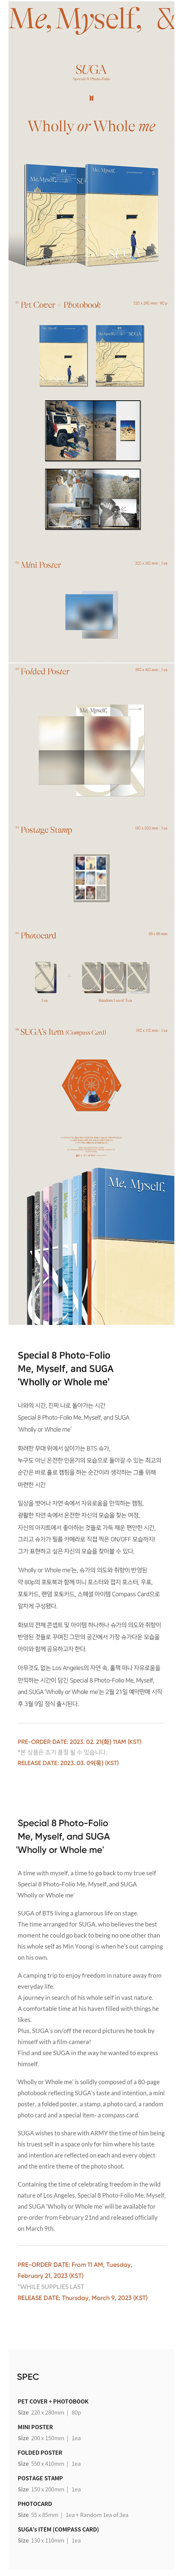 Special 8 Photo-Folio Me, Myself, And Suga 'Wholly Or Whole Me'